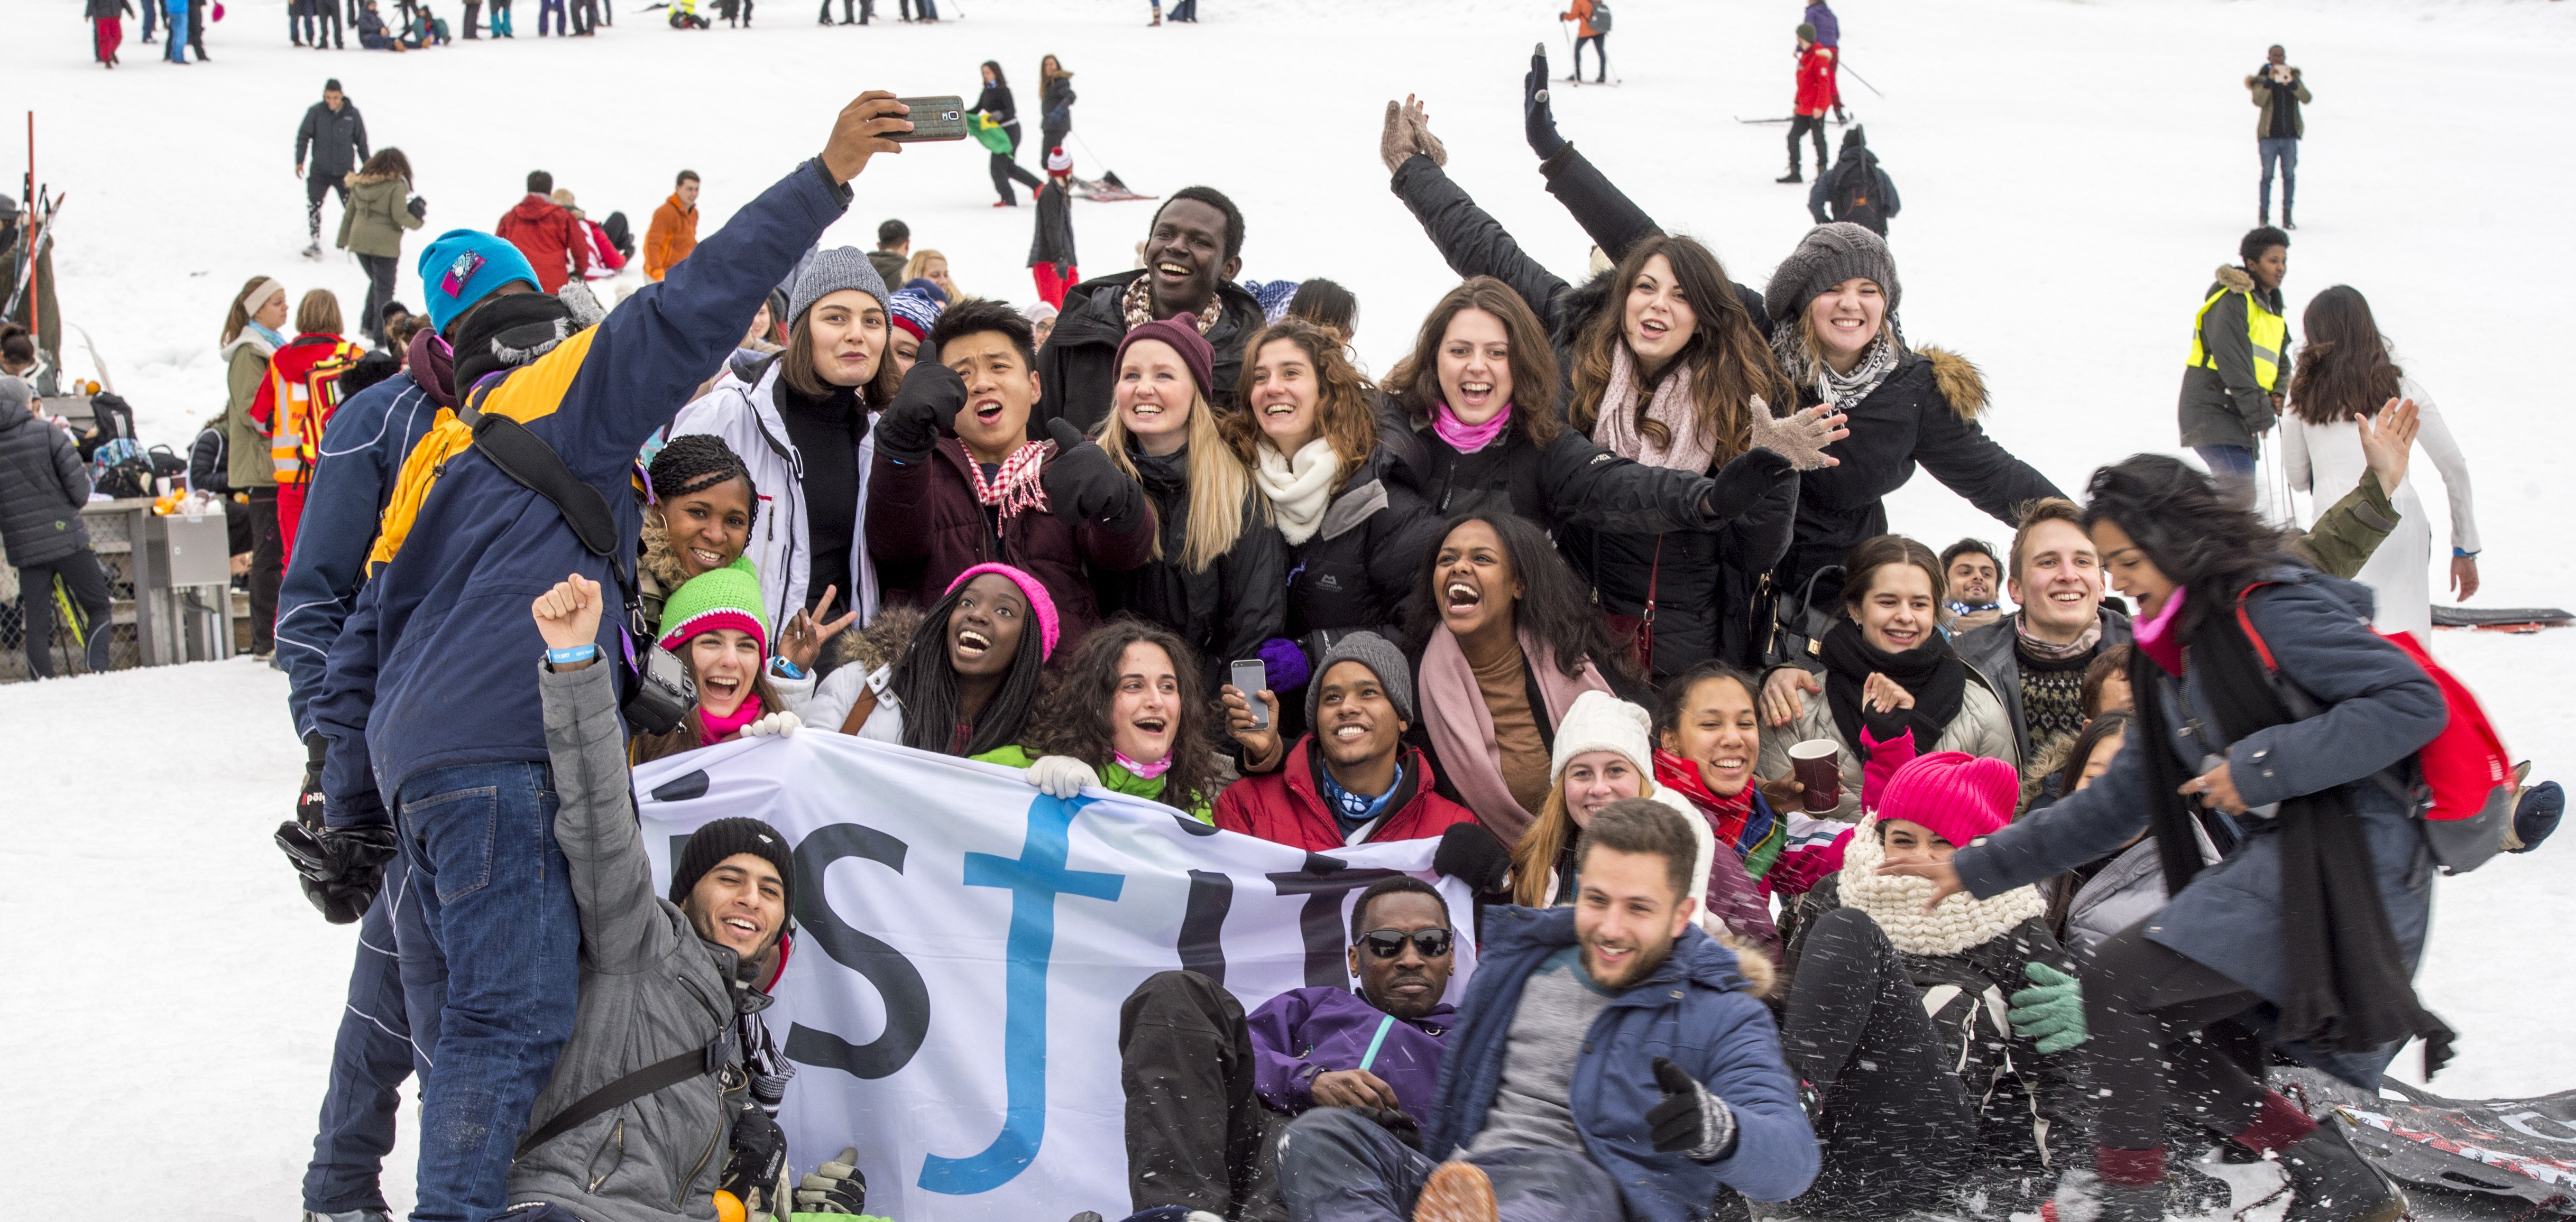 ISFiT (The International Student Festival in Trondheim) | LinkedIn